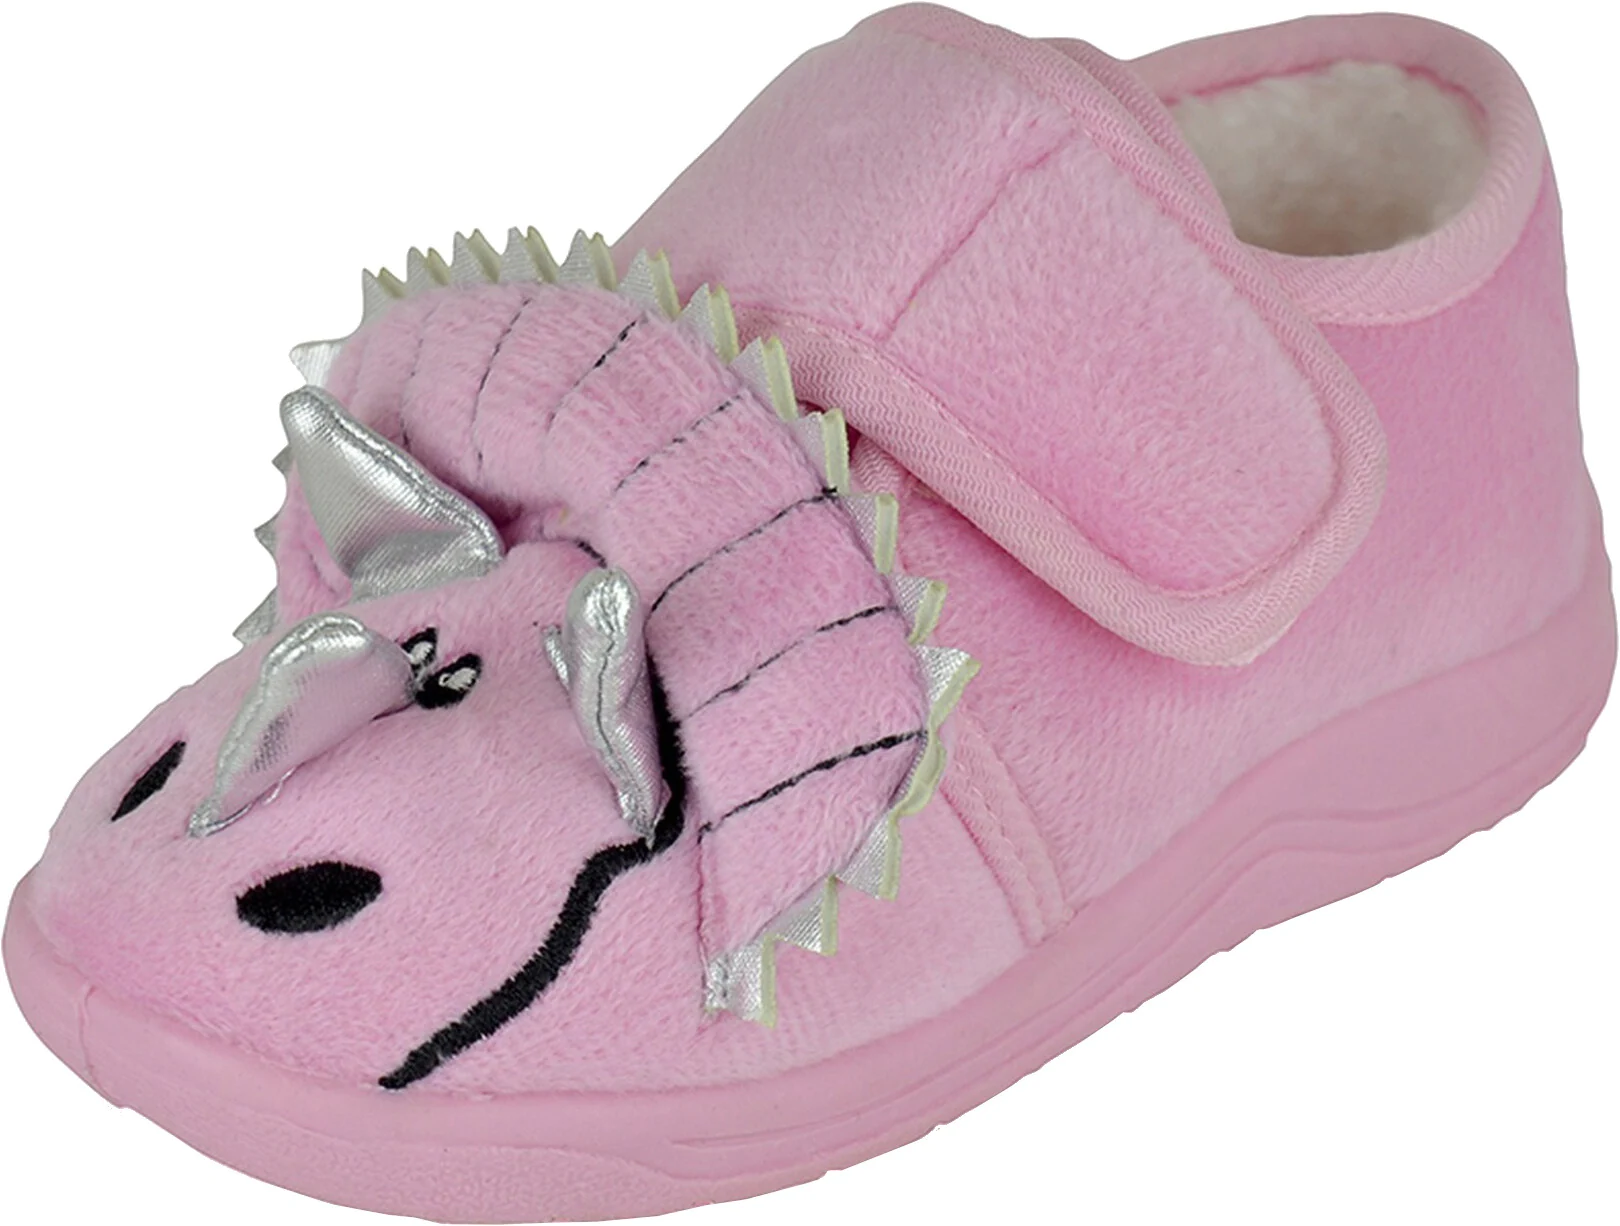 Generic Dinosaur slippers triceratops design